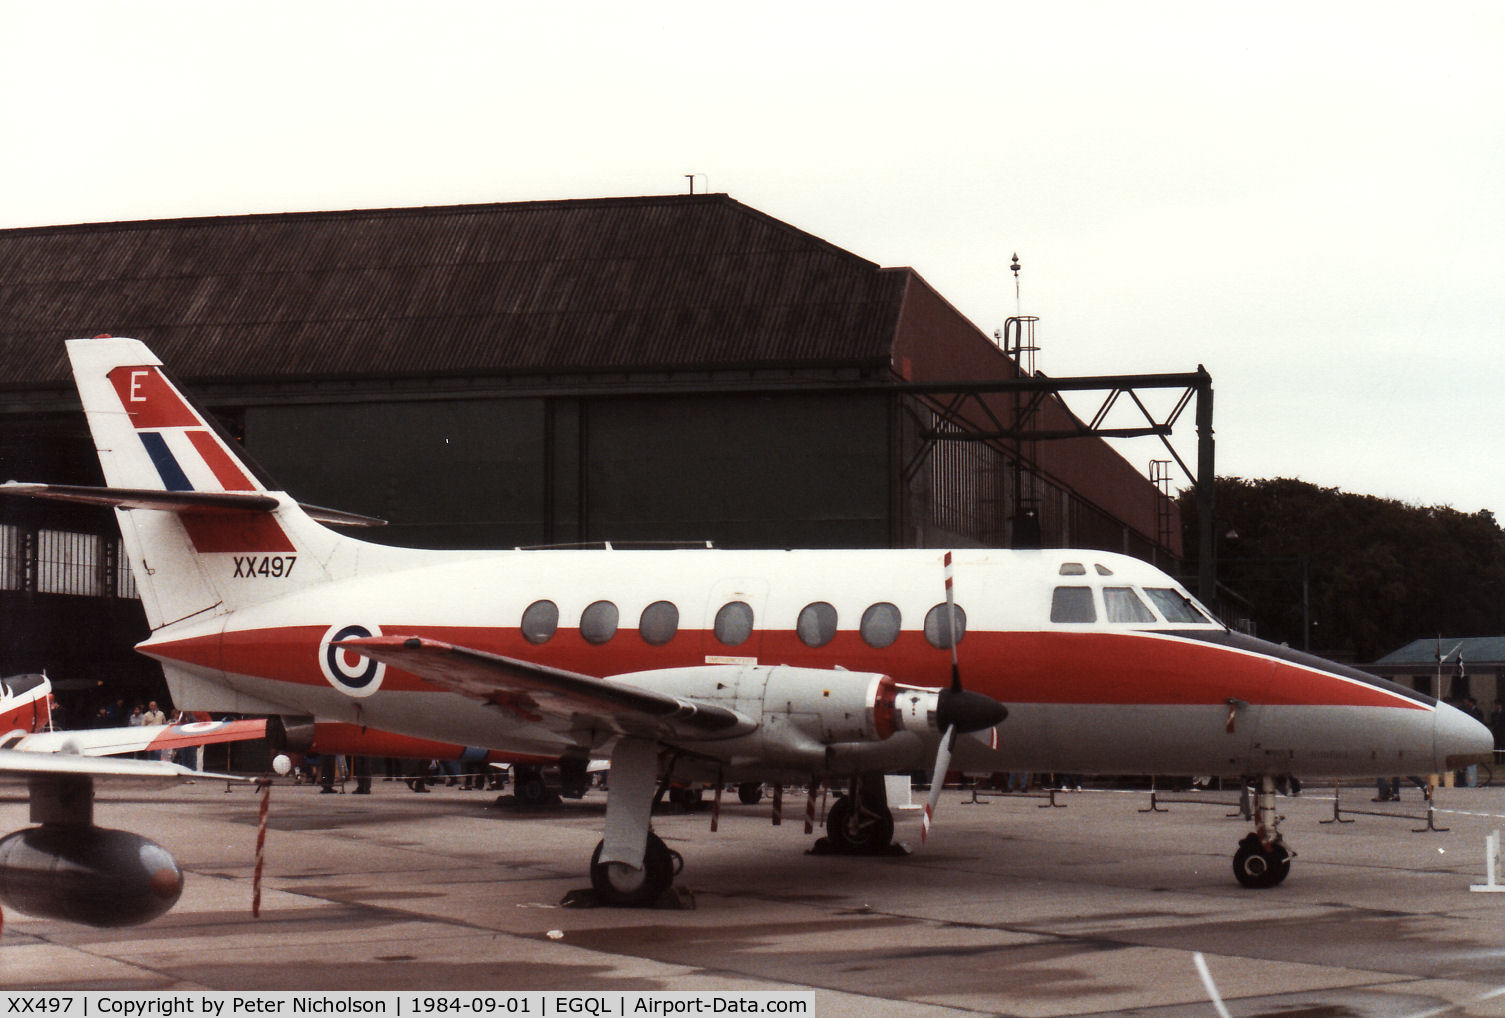 XX497, 1976 Scottish Aviation HP-137 Jetstream T.1 C/N 280, Jetstream T.1 of 6 Flying Training School based at RAF Finningley on display at the 1984 RAF Leuchars Airshow.